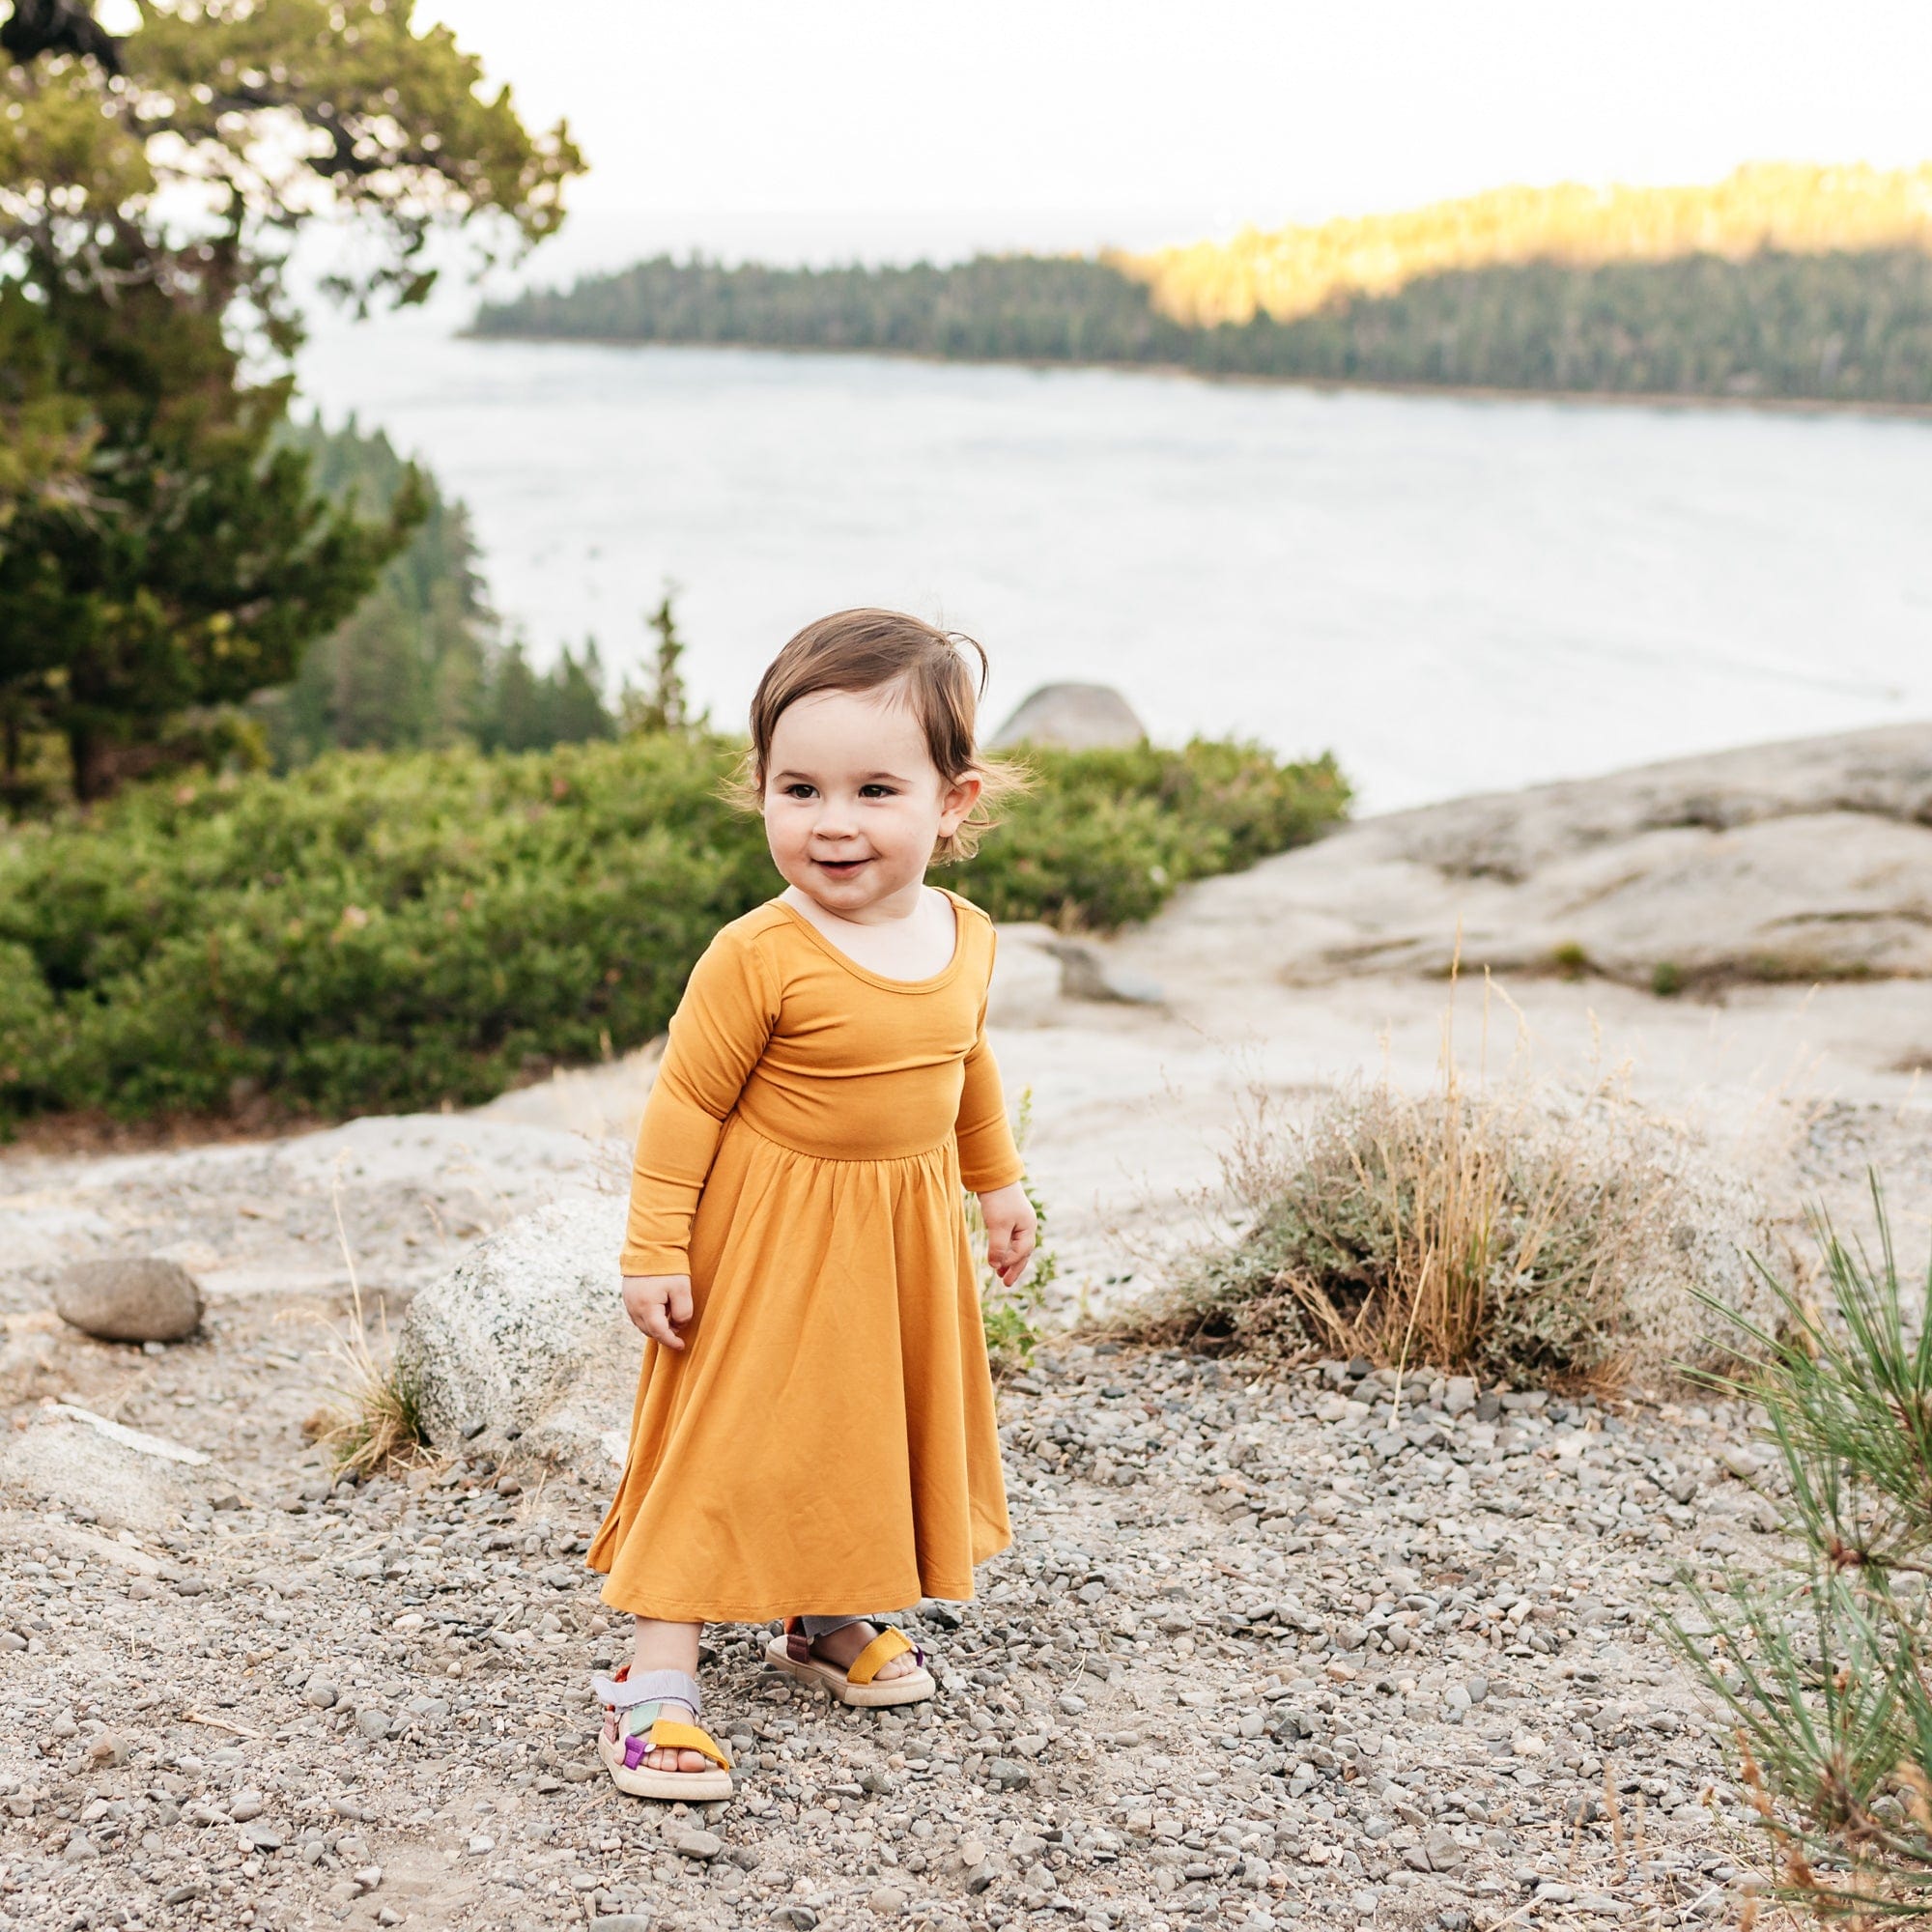 Kyte BABY Toddler Long Sleeve Twirl Dress Long Sleeve Twirl Dress in Marigold